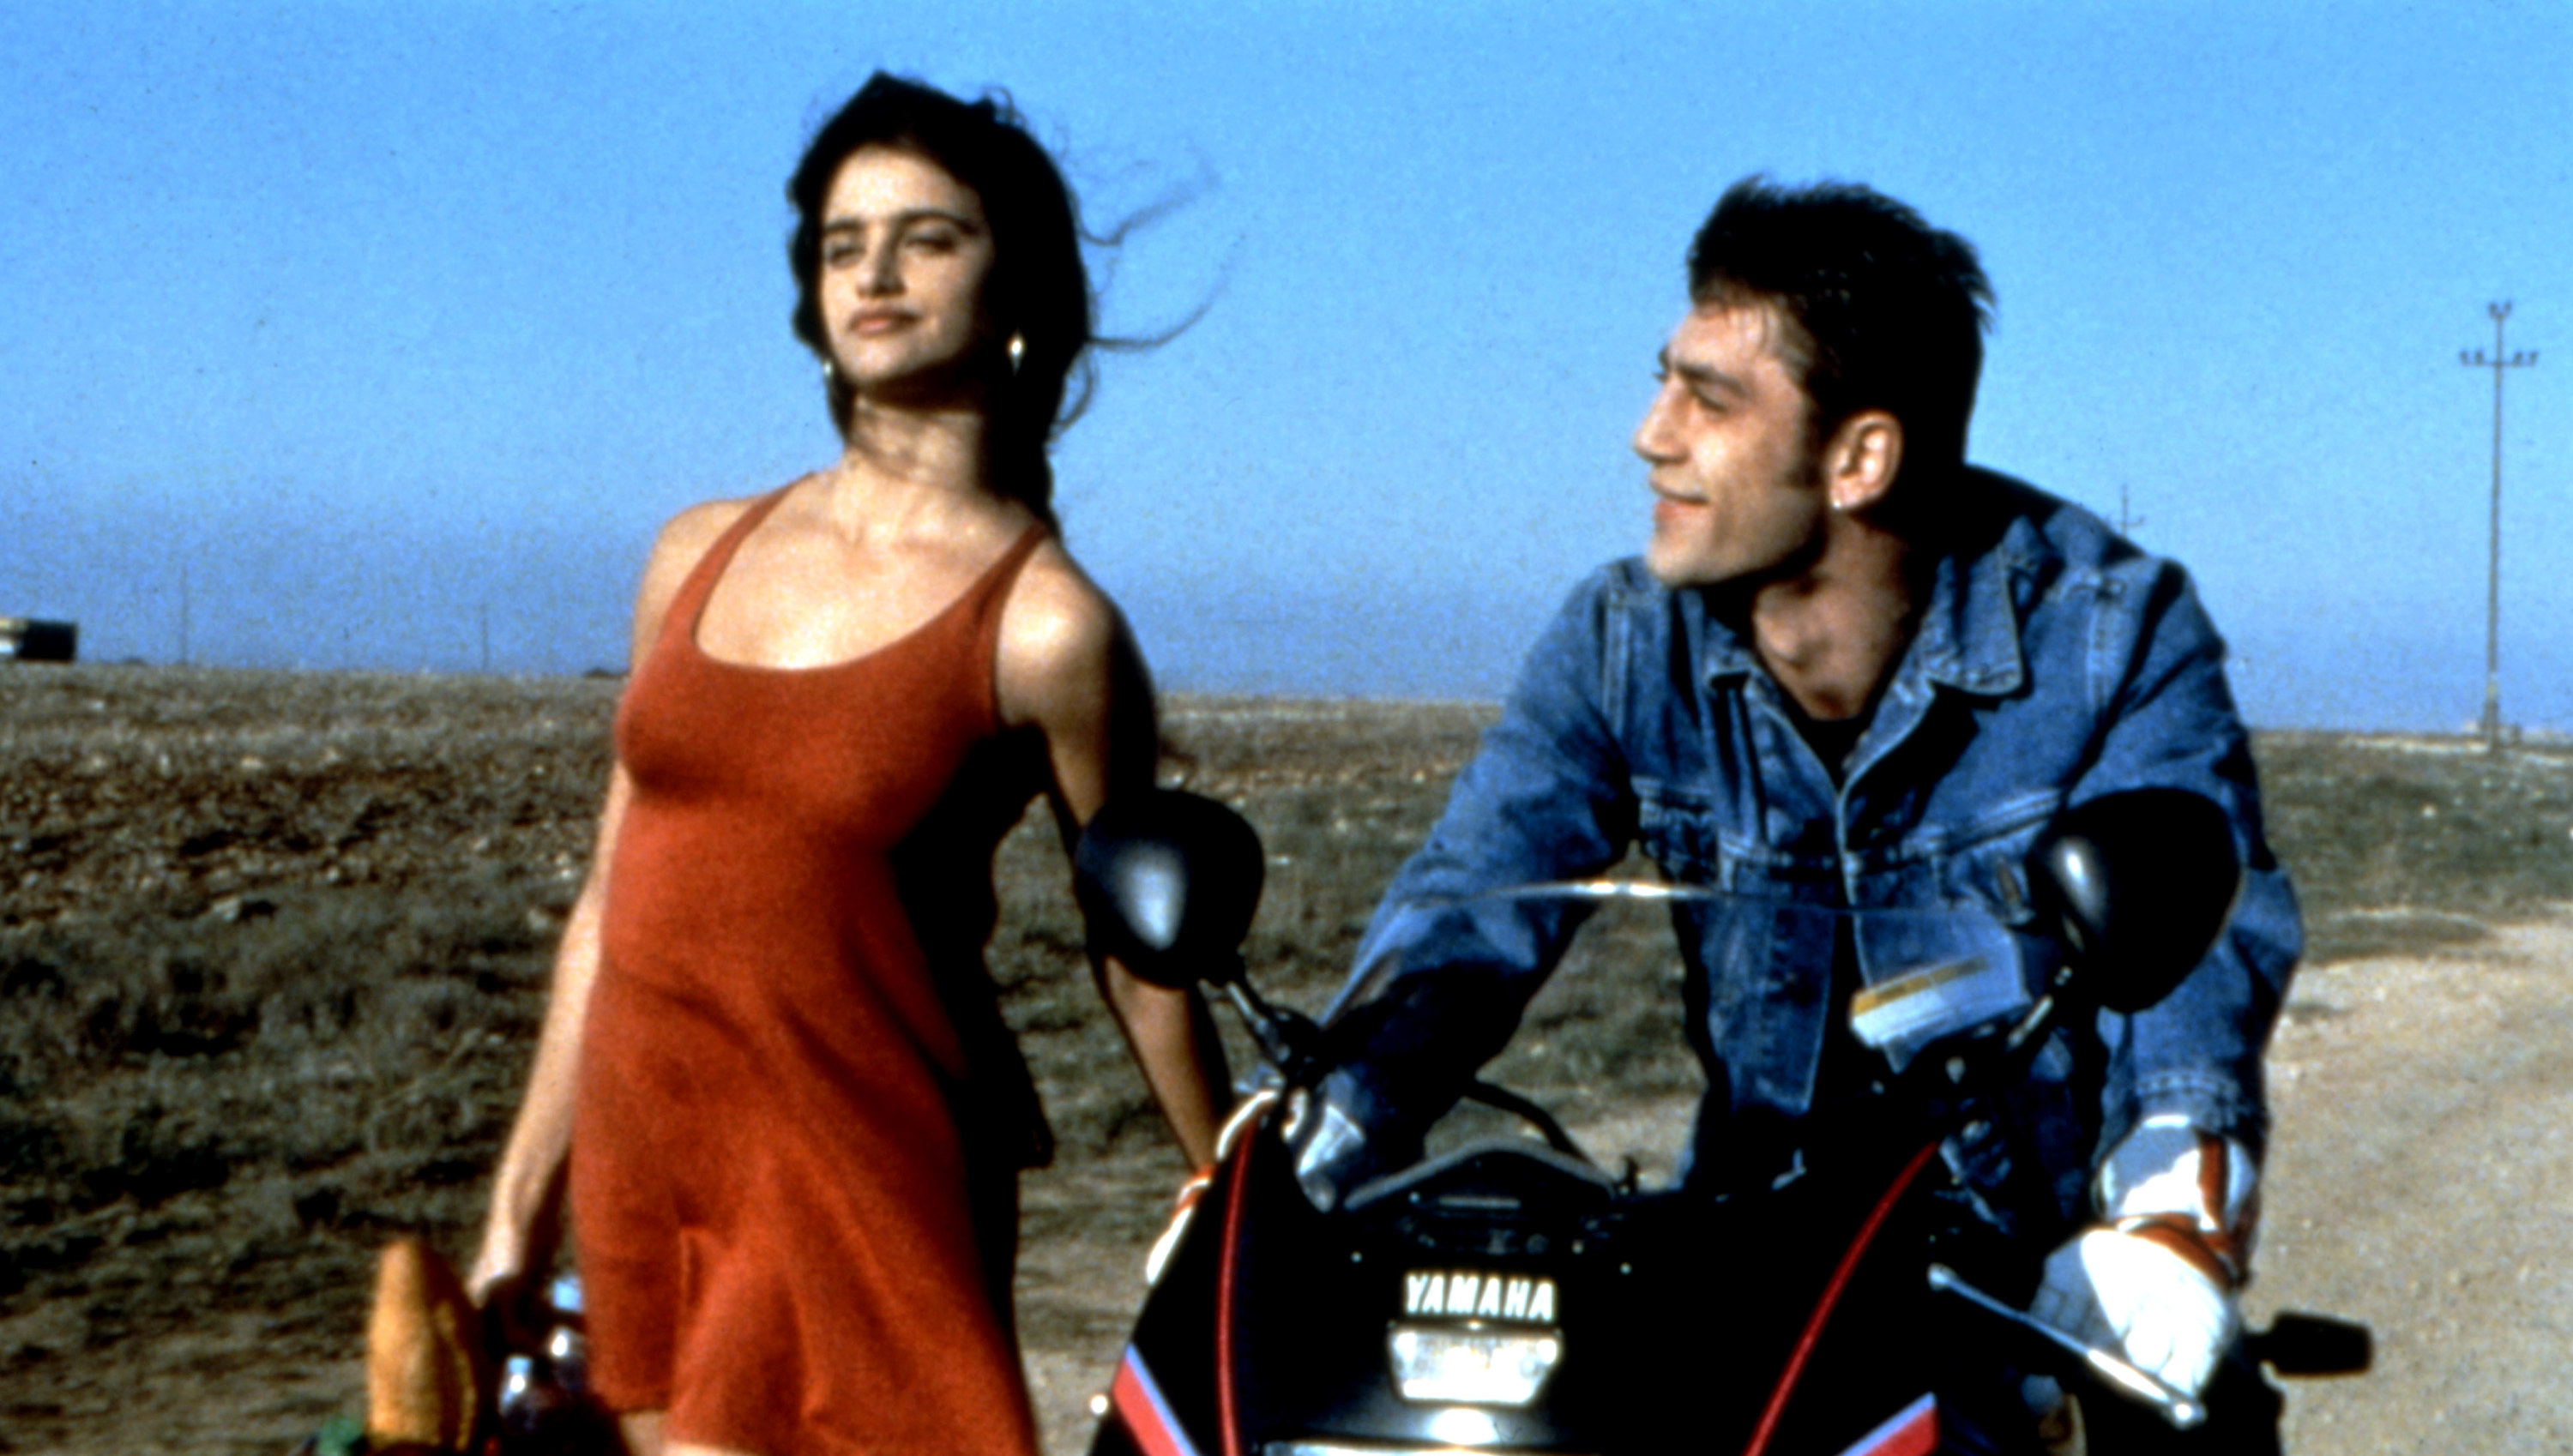 Silvia walks alongside Raul driving a motorcycle